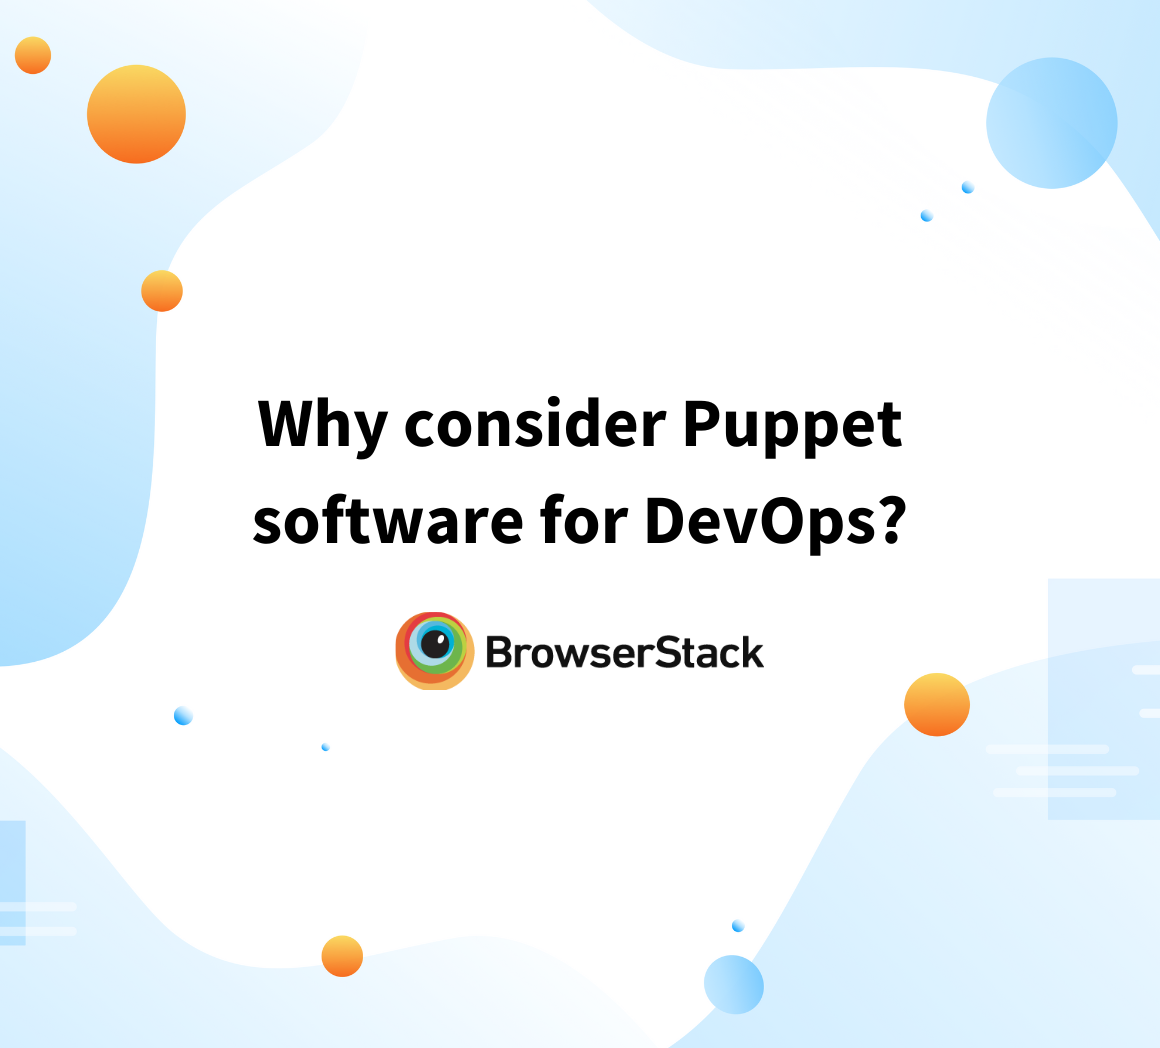 Why consider Puppet software for DevOps?